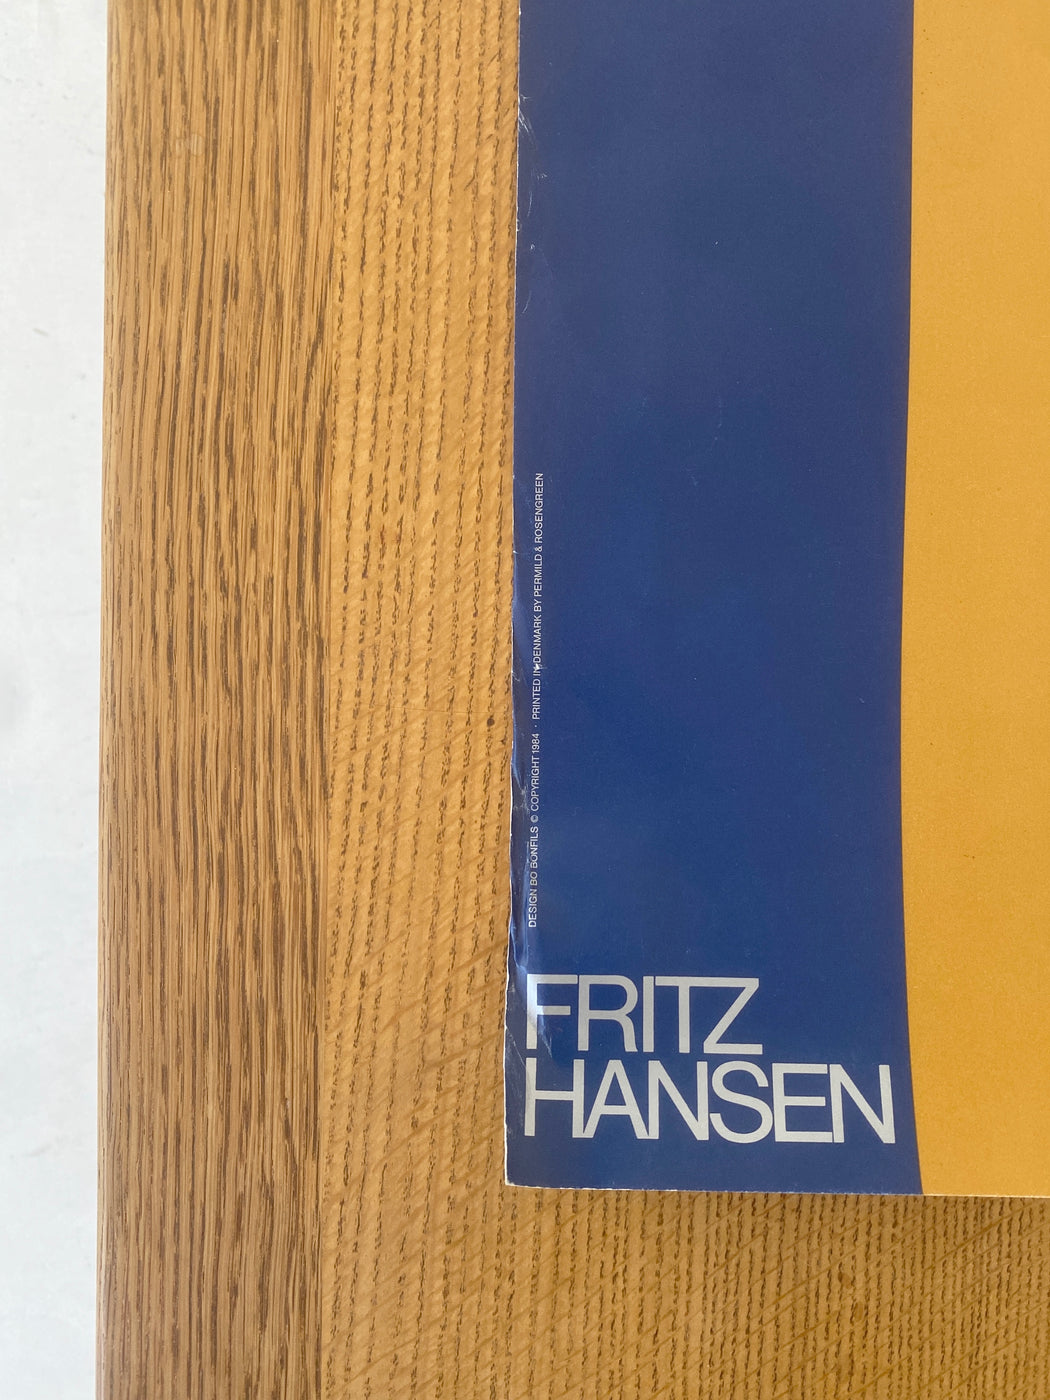 Fritz Hansen 'Friis & Moltke' Poster